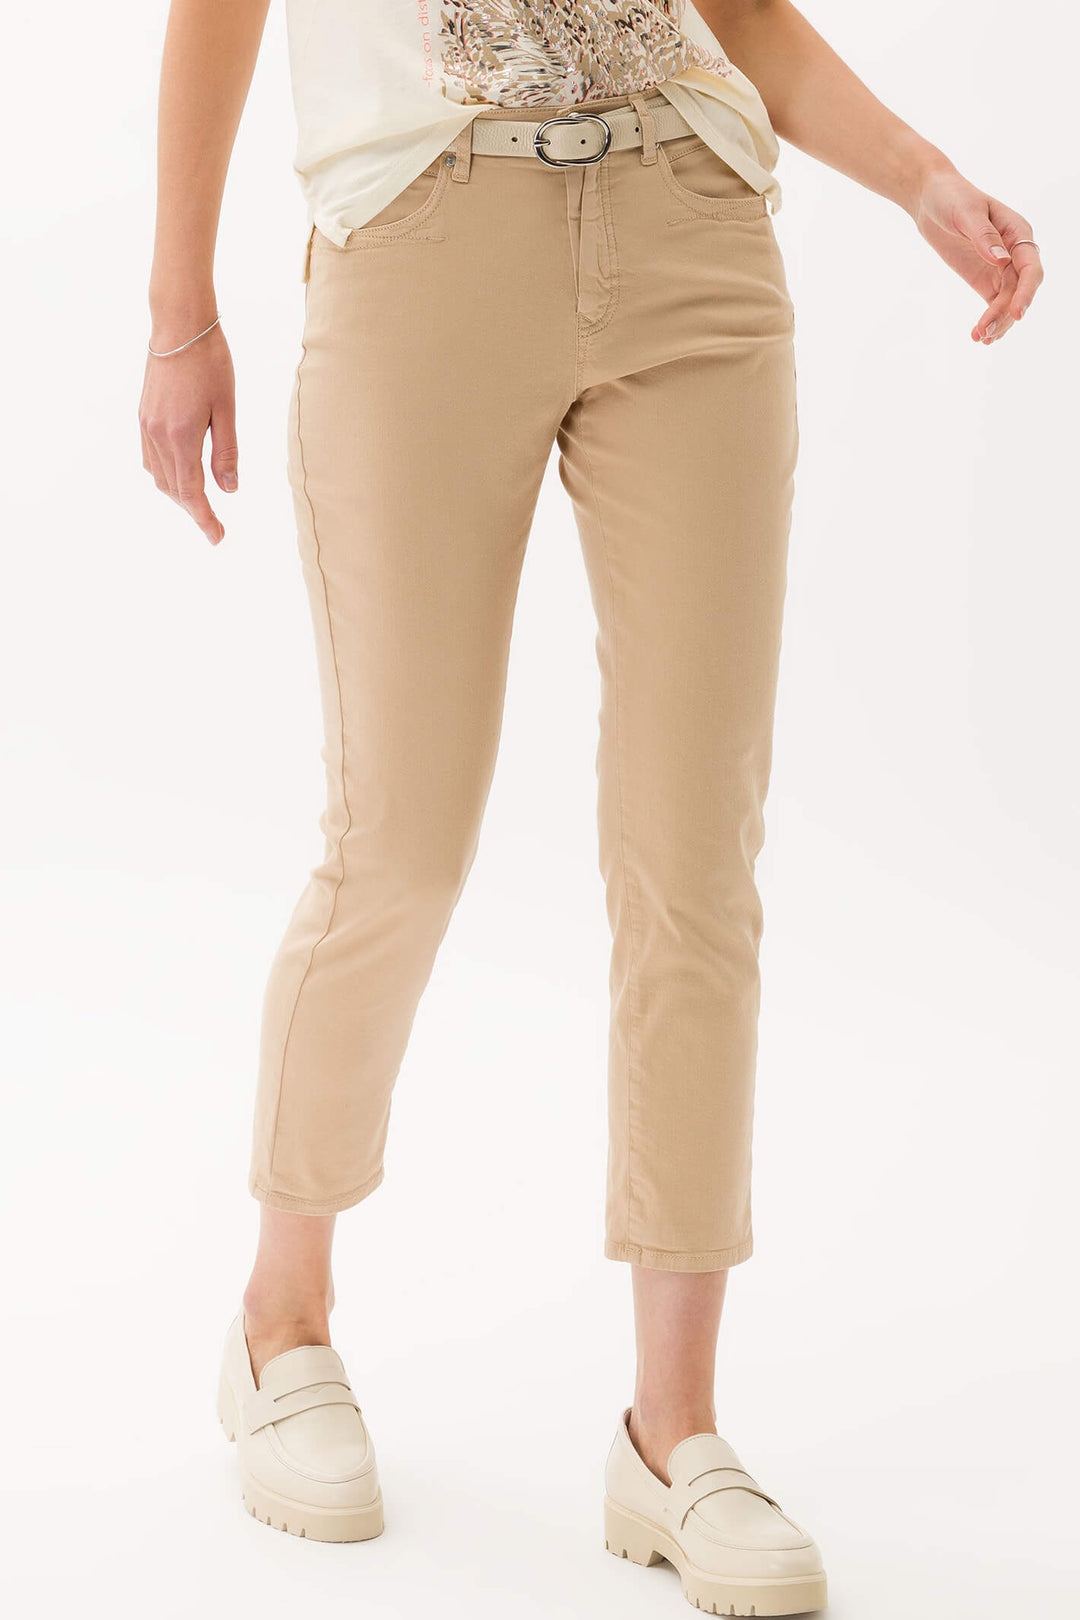 Brax Mary S 71-7558-55 Bast Sand Denim Jeans - Olivia Grace Fashion